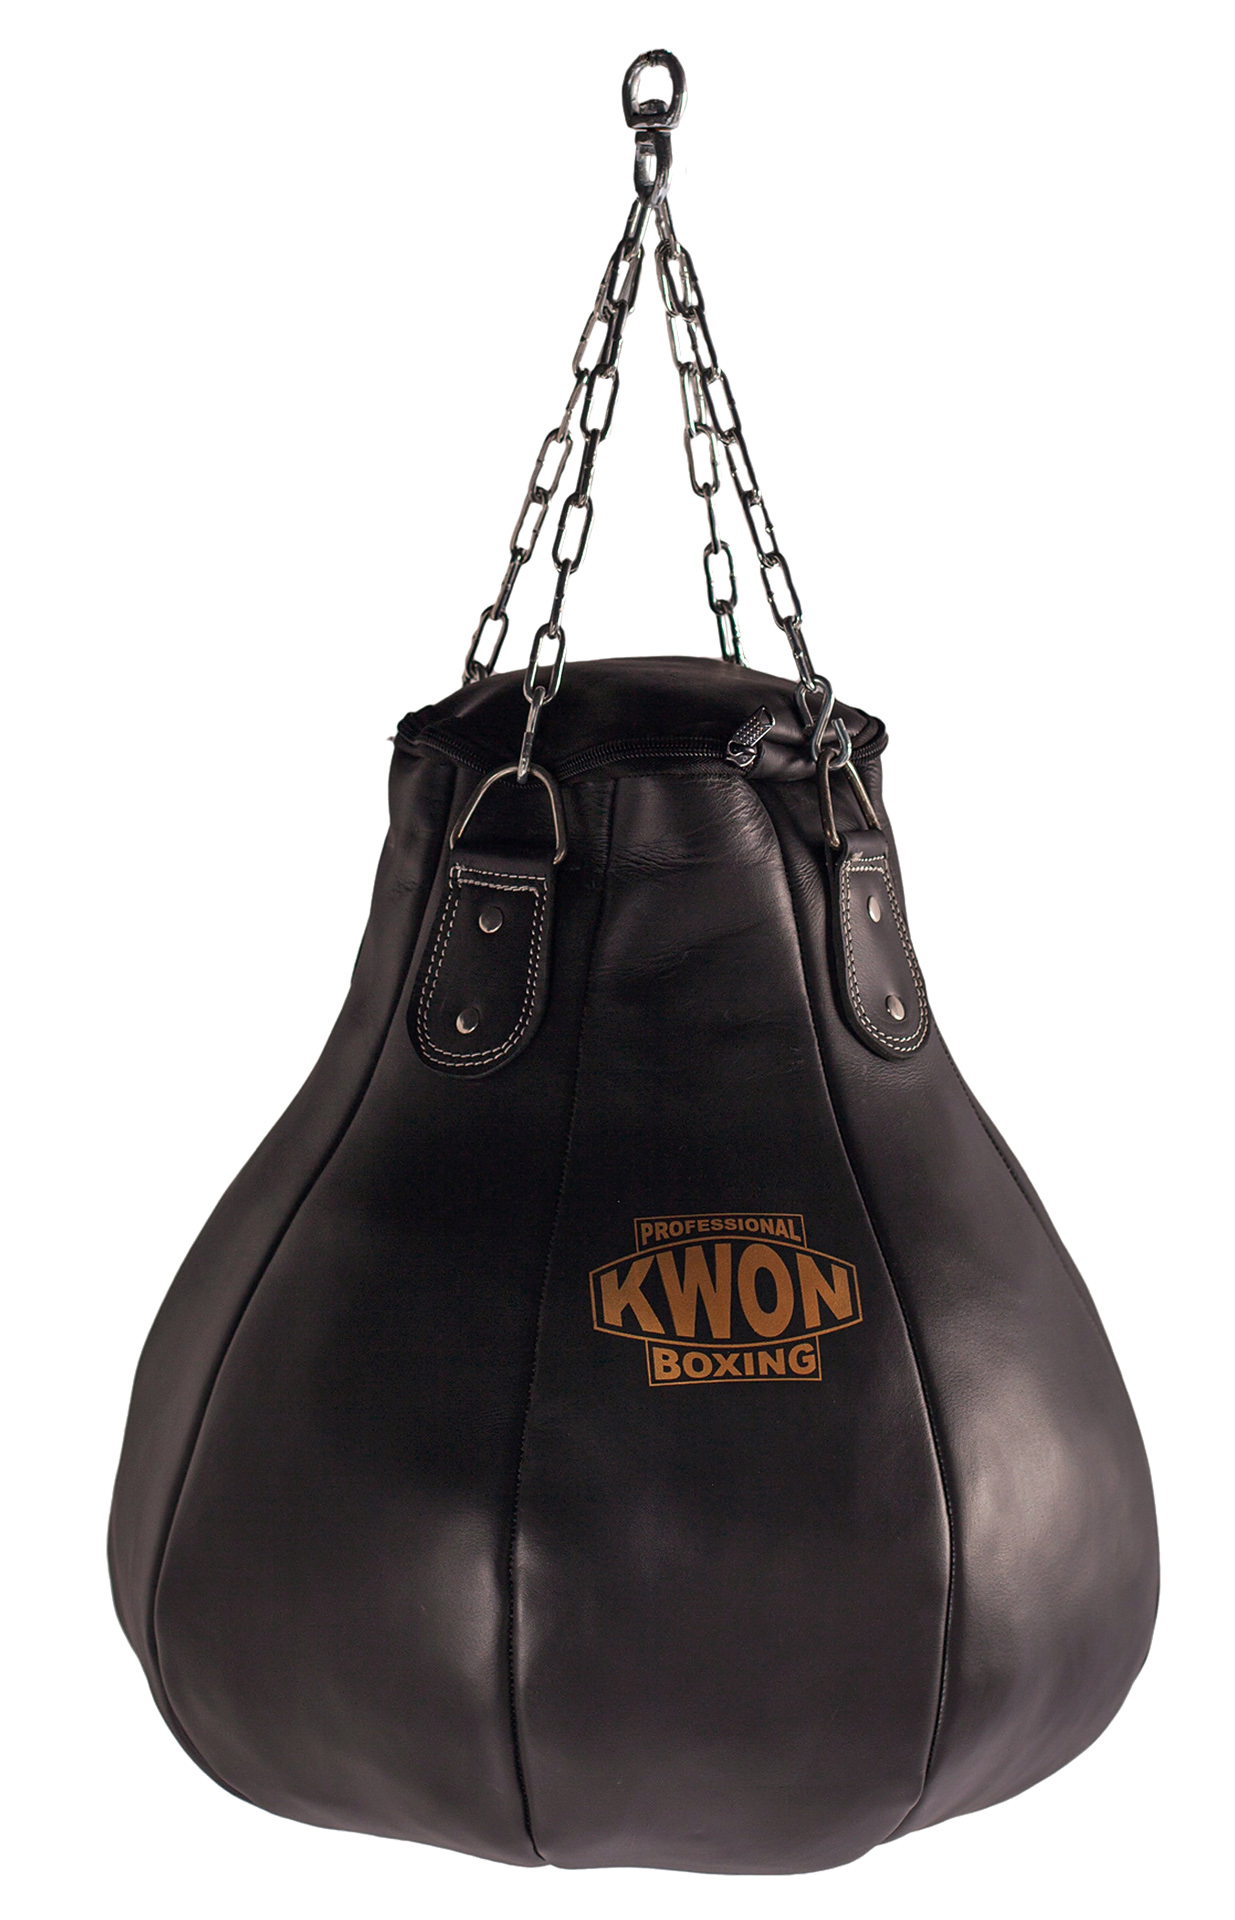 https://www.kwon.com/media/image/02/5d/e3/kwon-professional-boxing-boxbirne-leder-gefuellt-814080440.jpg